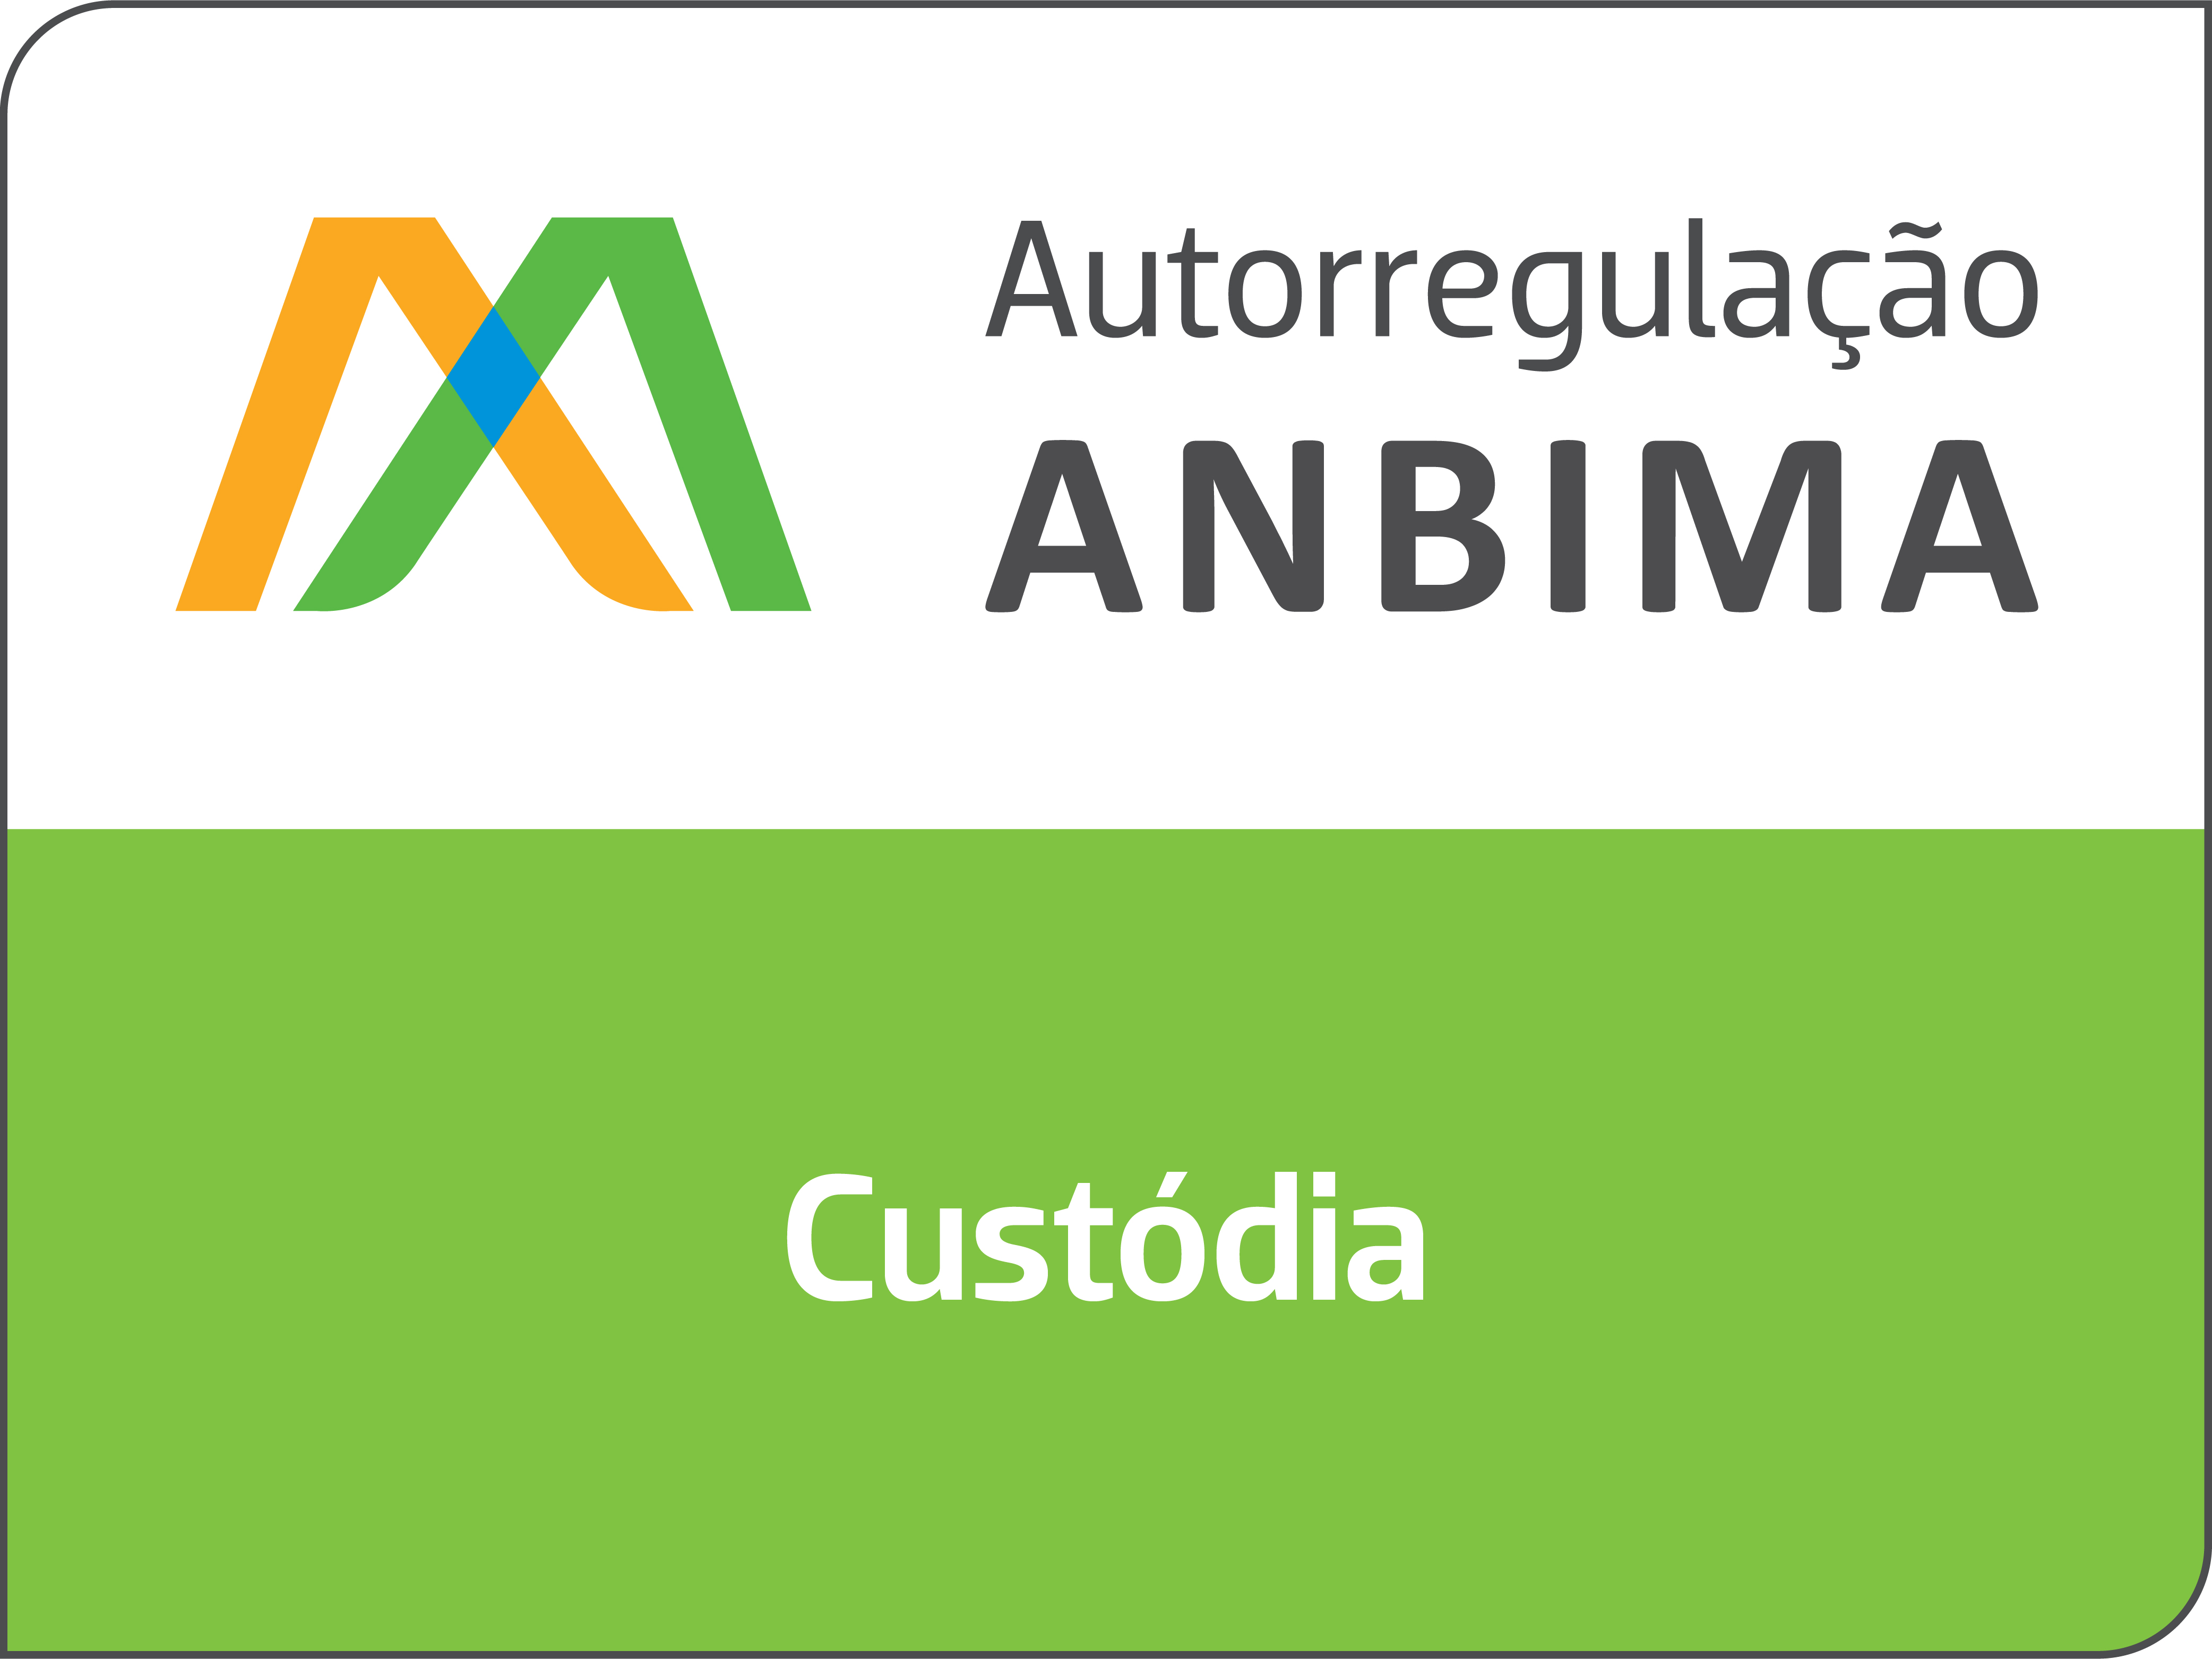 AMBIMA Logo - Permanent Custody